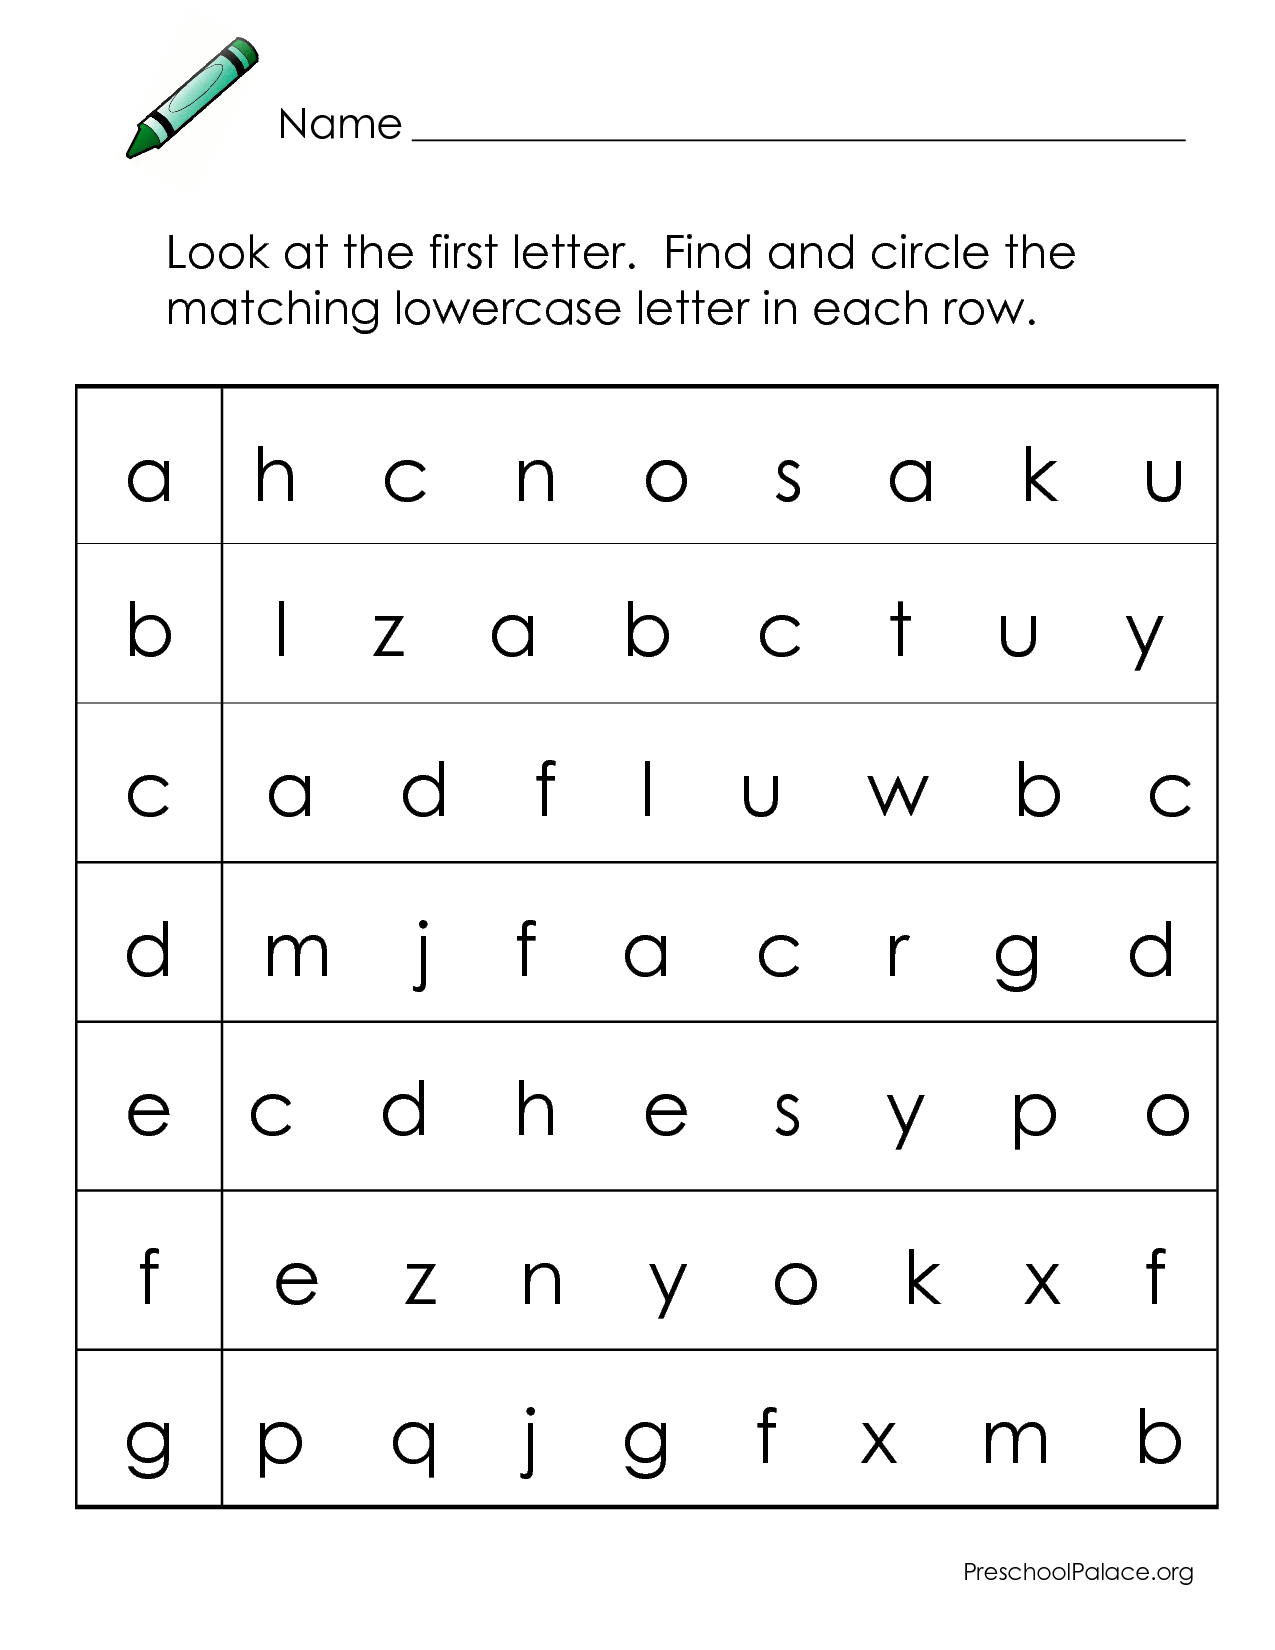 Alphabet Worksheets For Preschoolers | Abcs - Letter inside Alphabet Matching Worksheets For Kindergarten